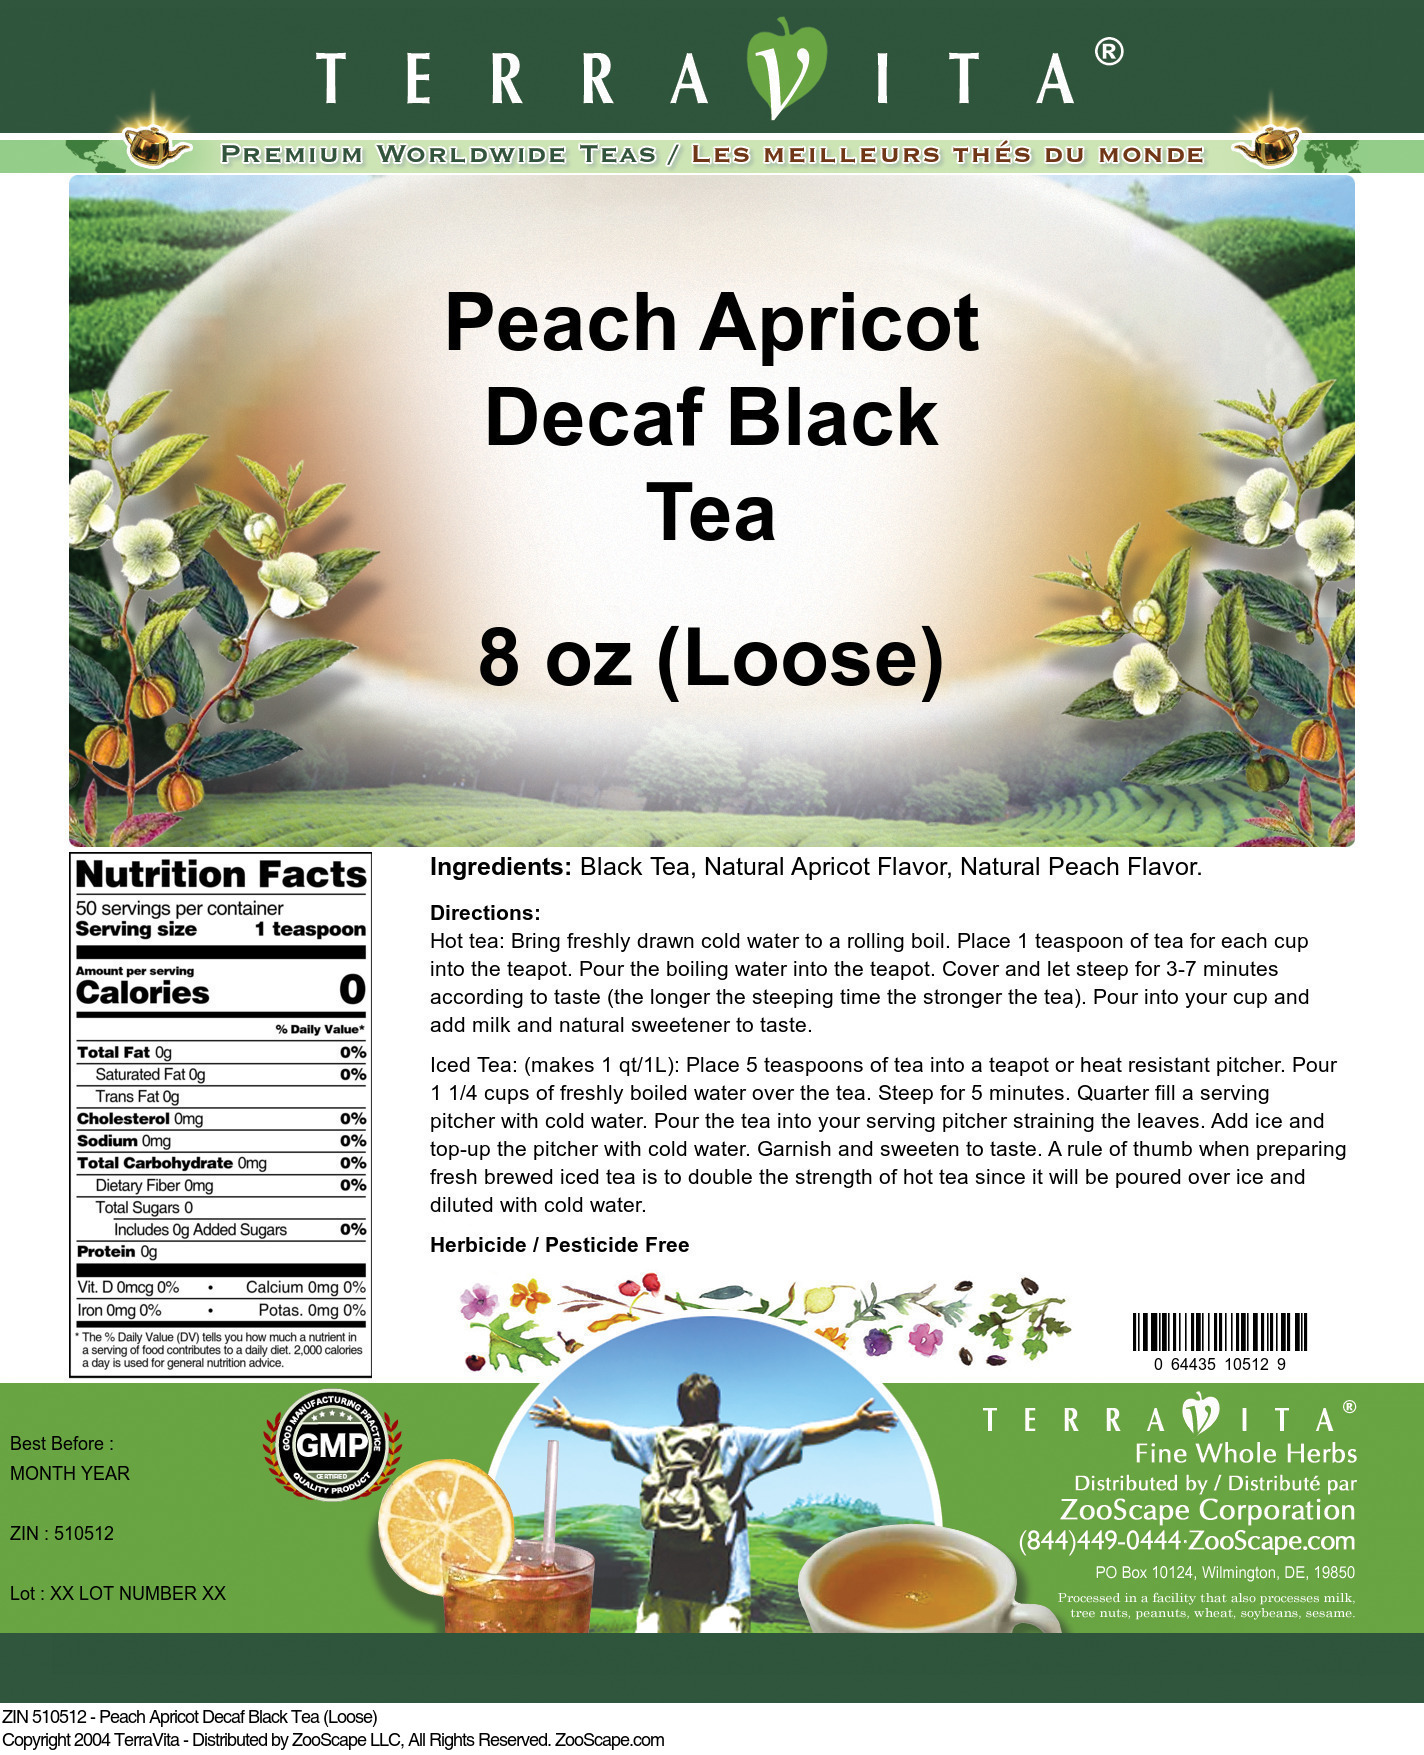 Peach Apricot Decaf Black Tea (Loose) - Label